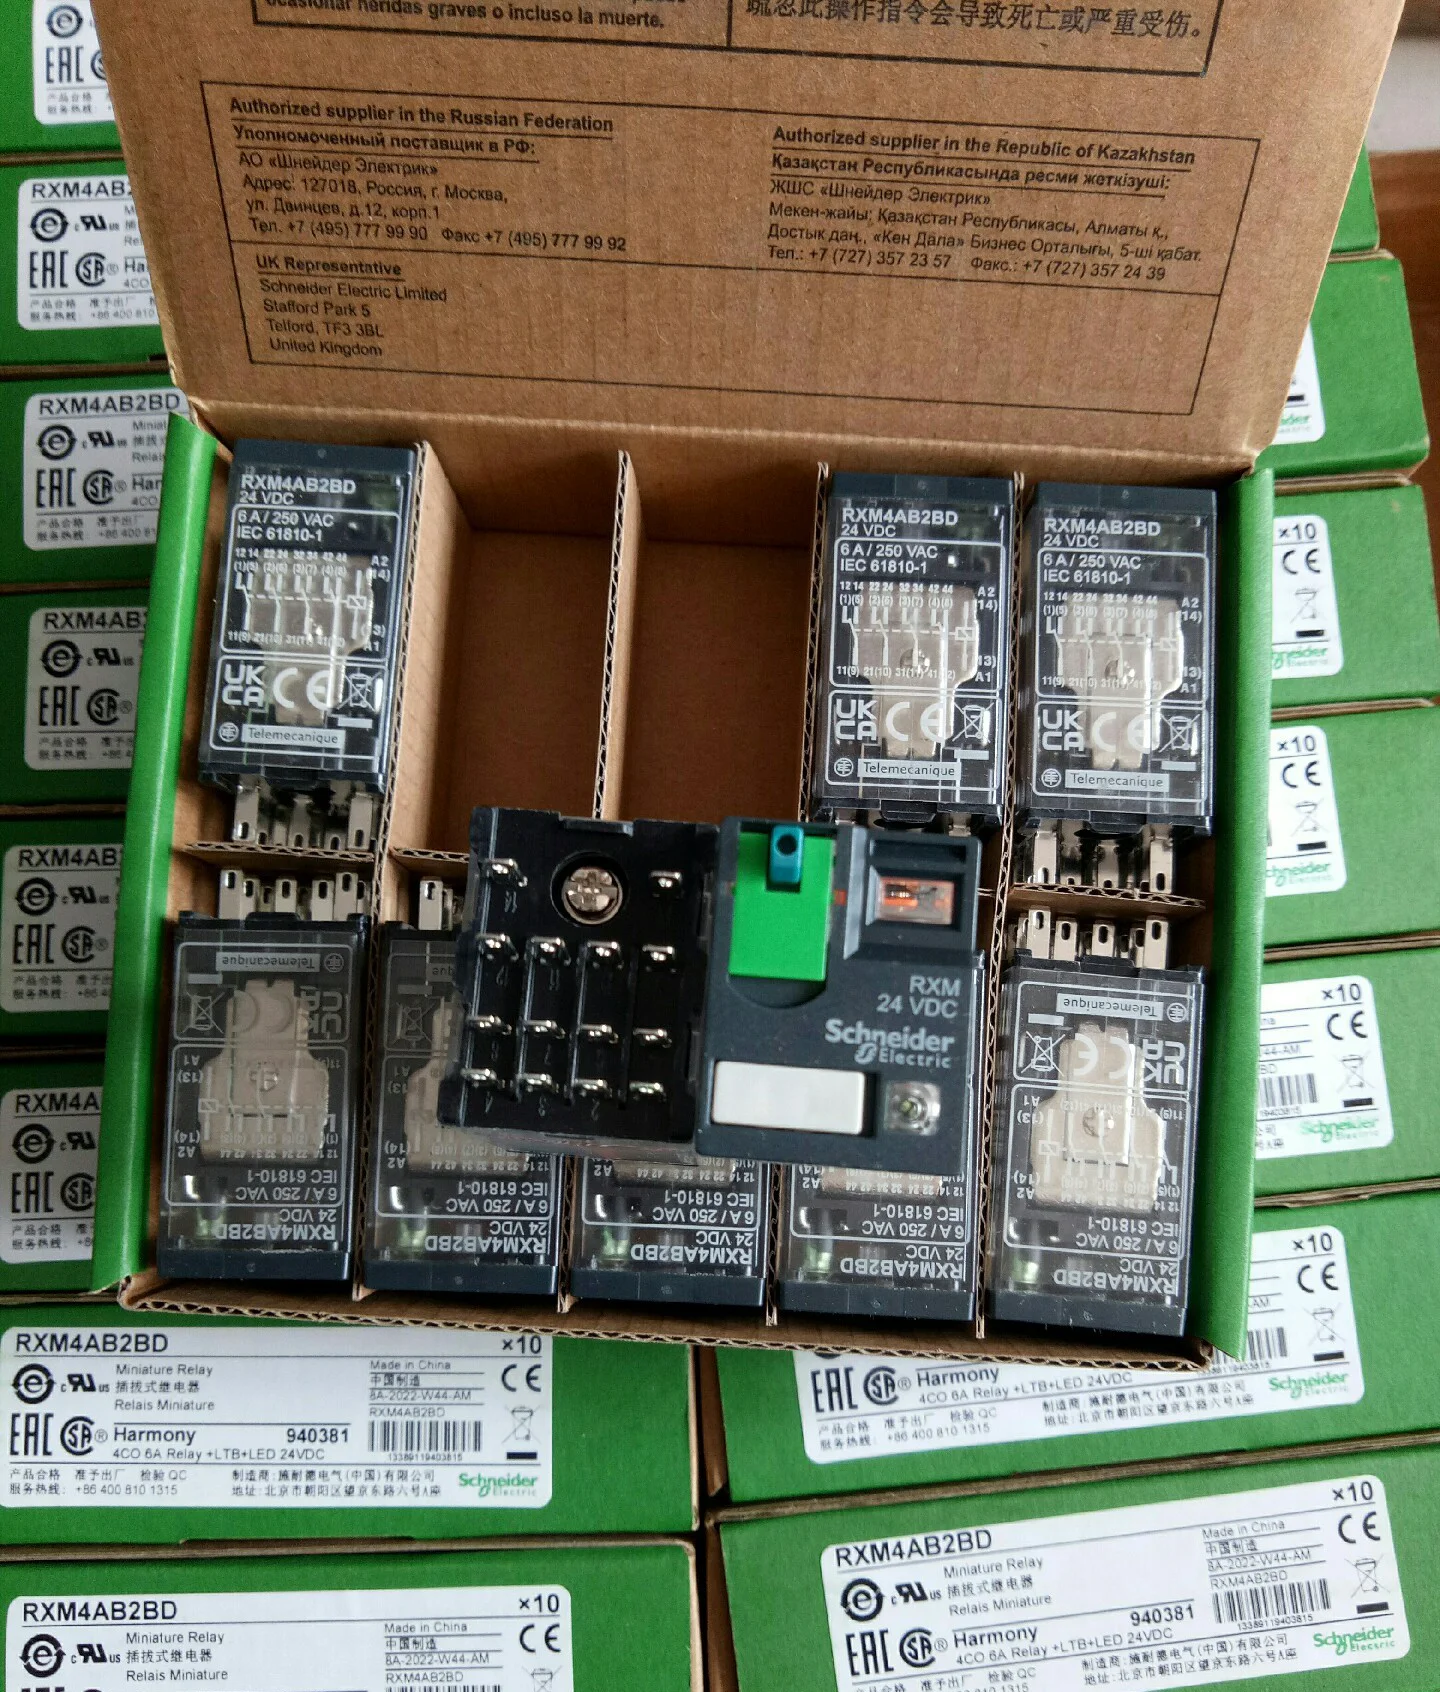 Distributor Miniature plug-in relay DC24V 6A RXM4AB2BD relay telemecanique Contactor for Schneider